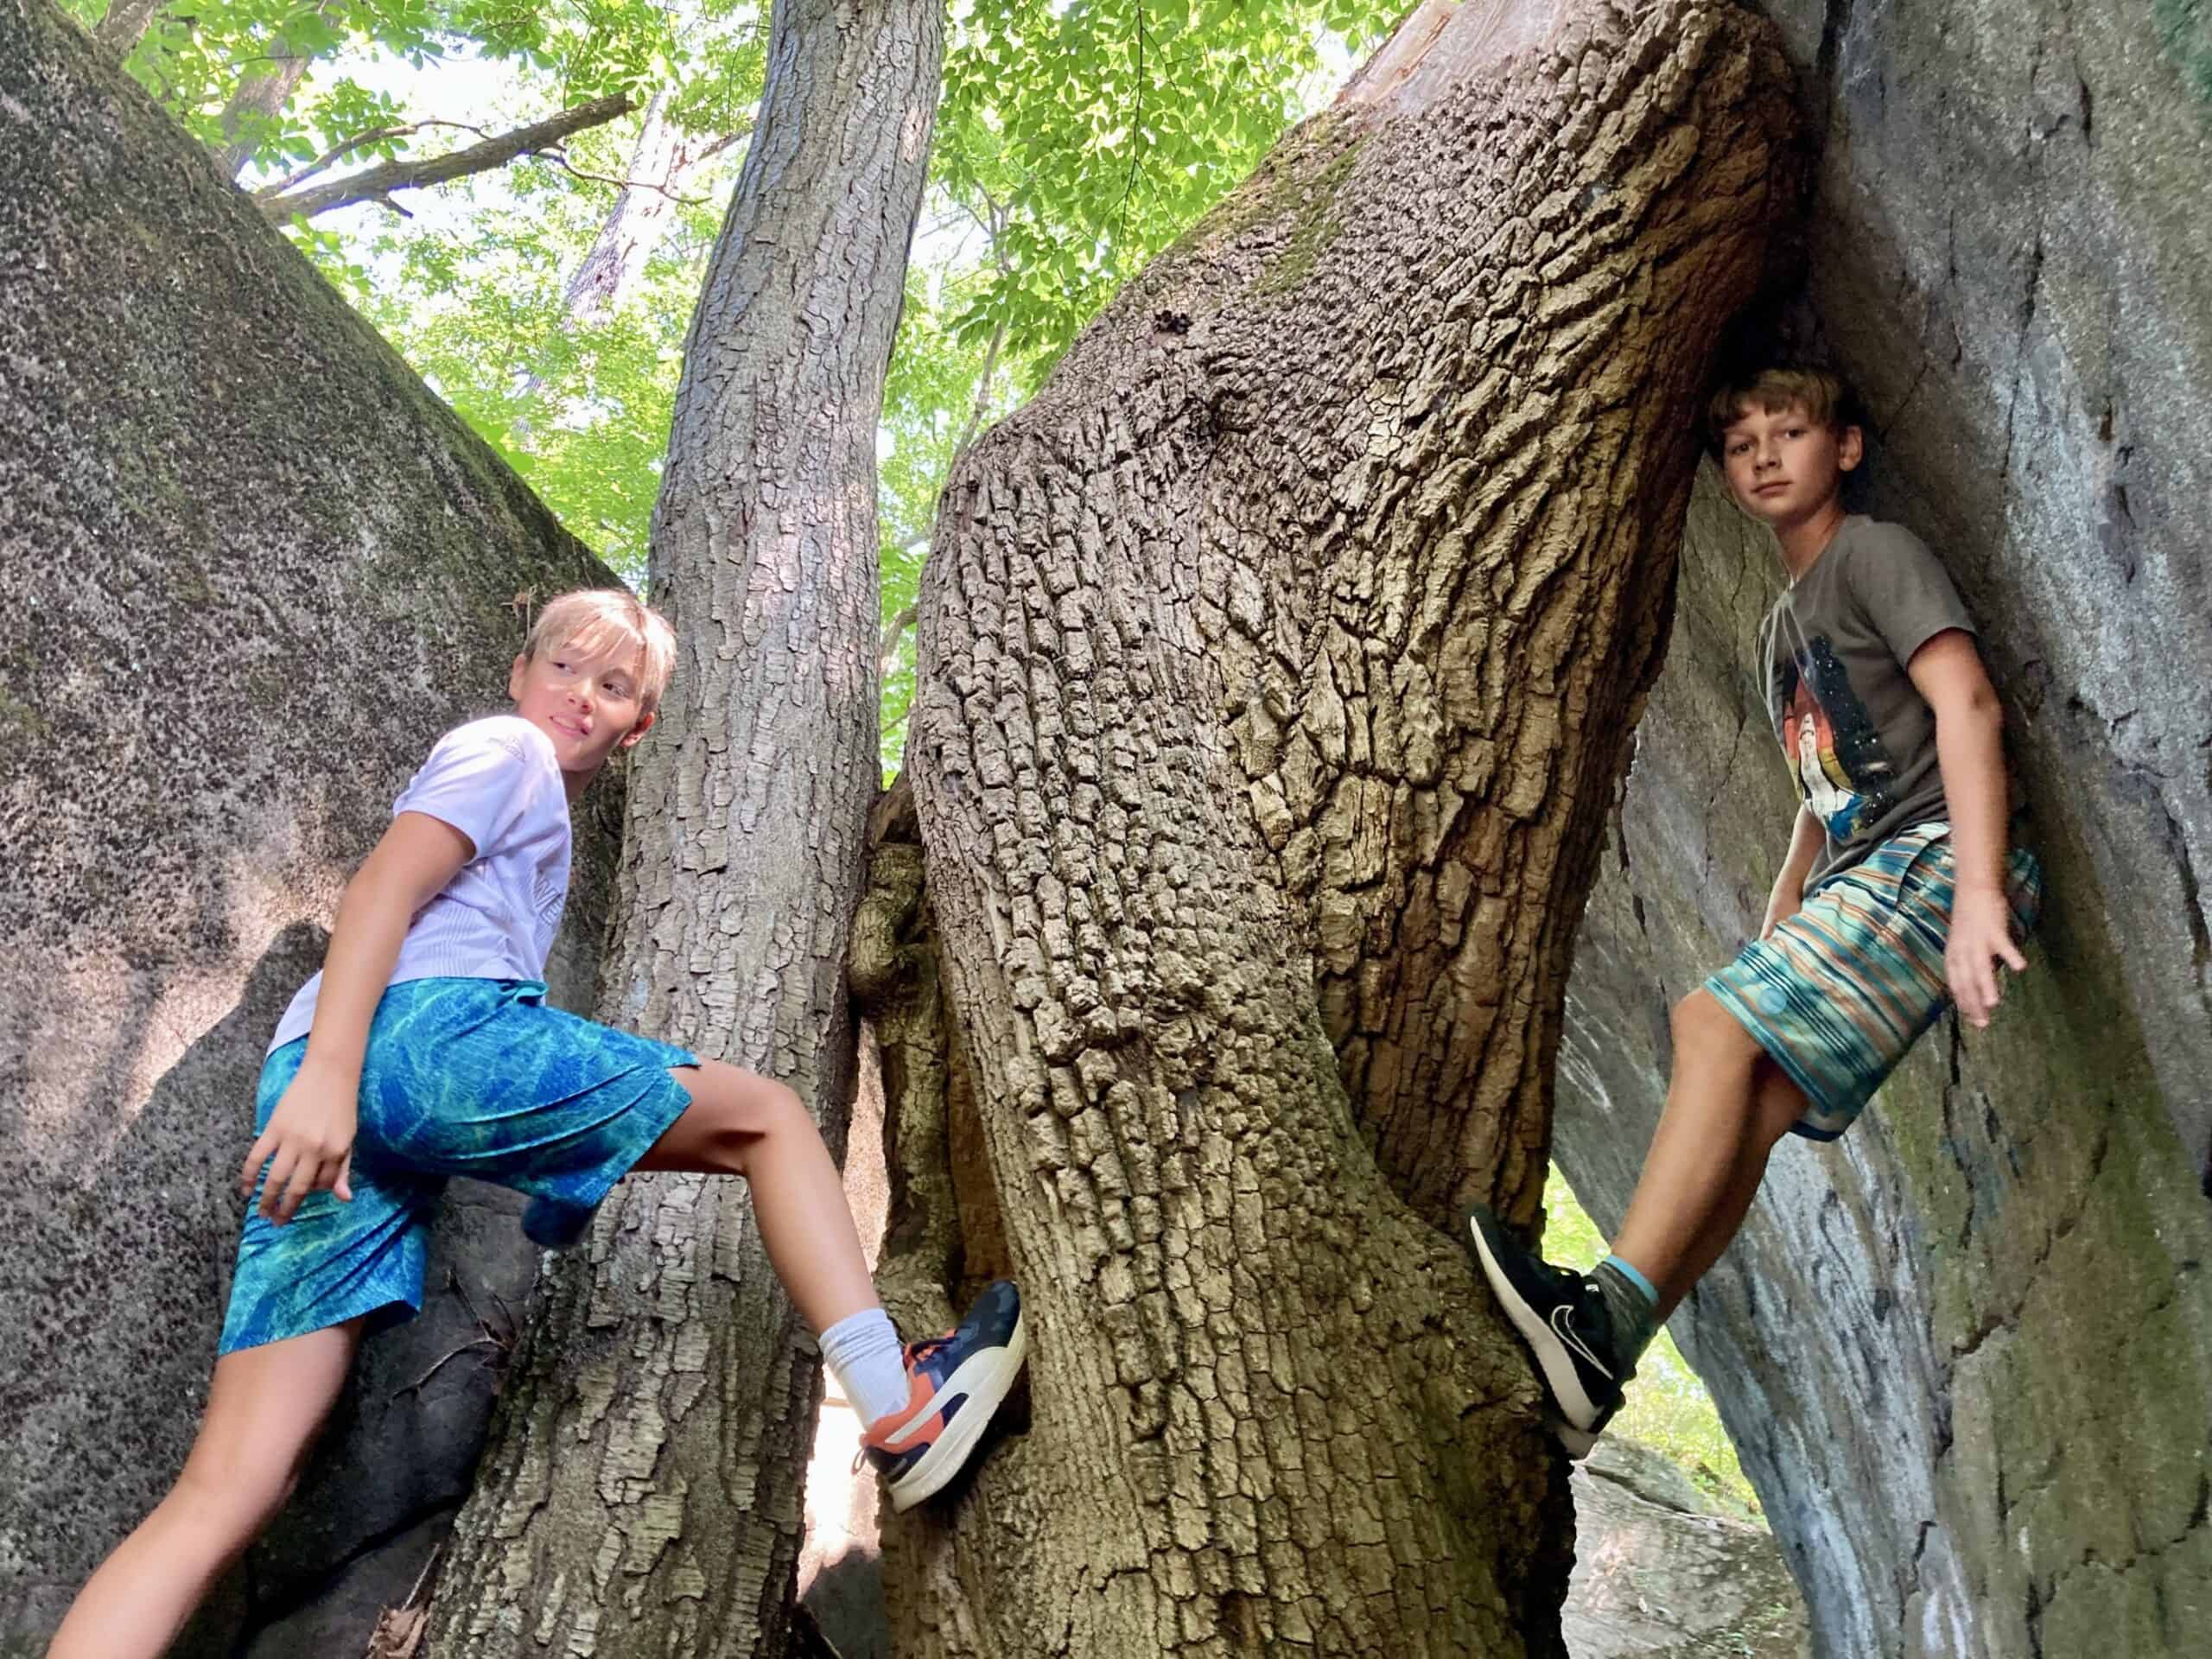 Camp kids posing between trees and boulders